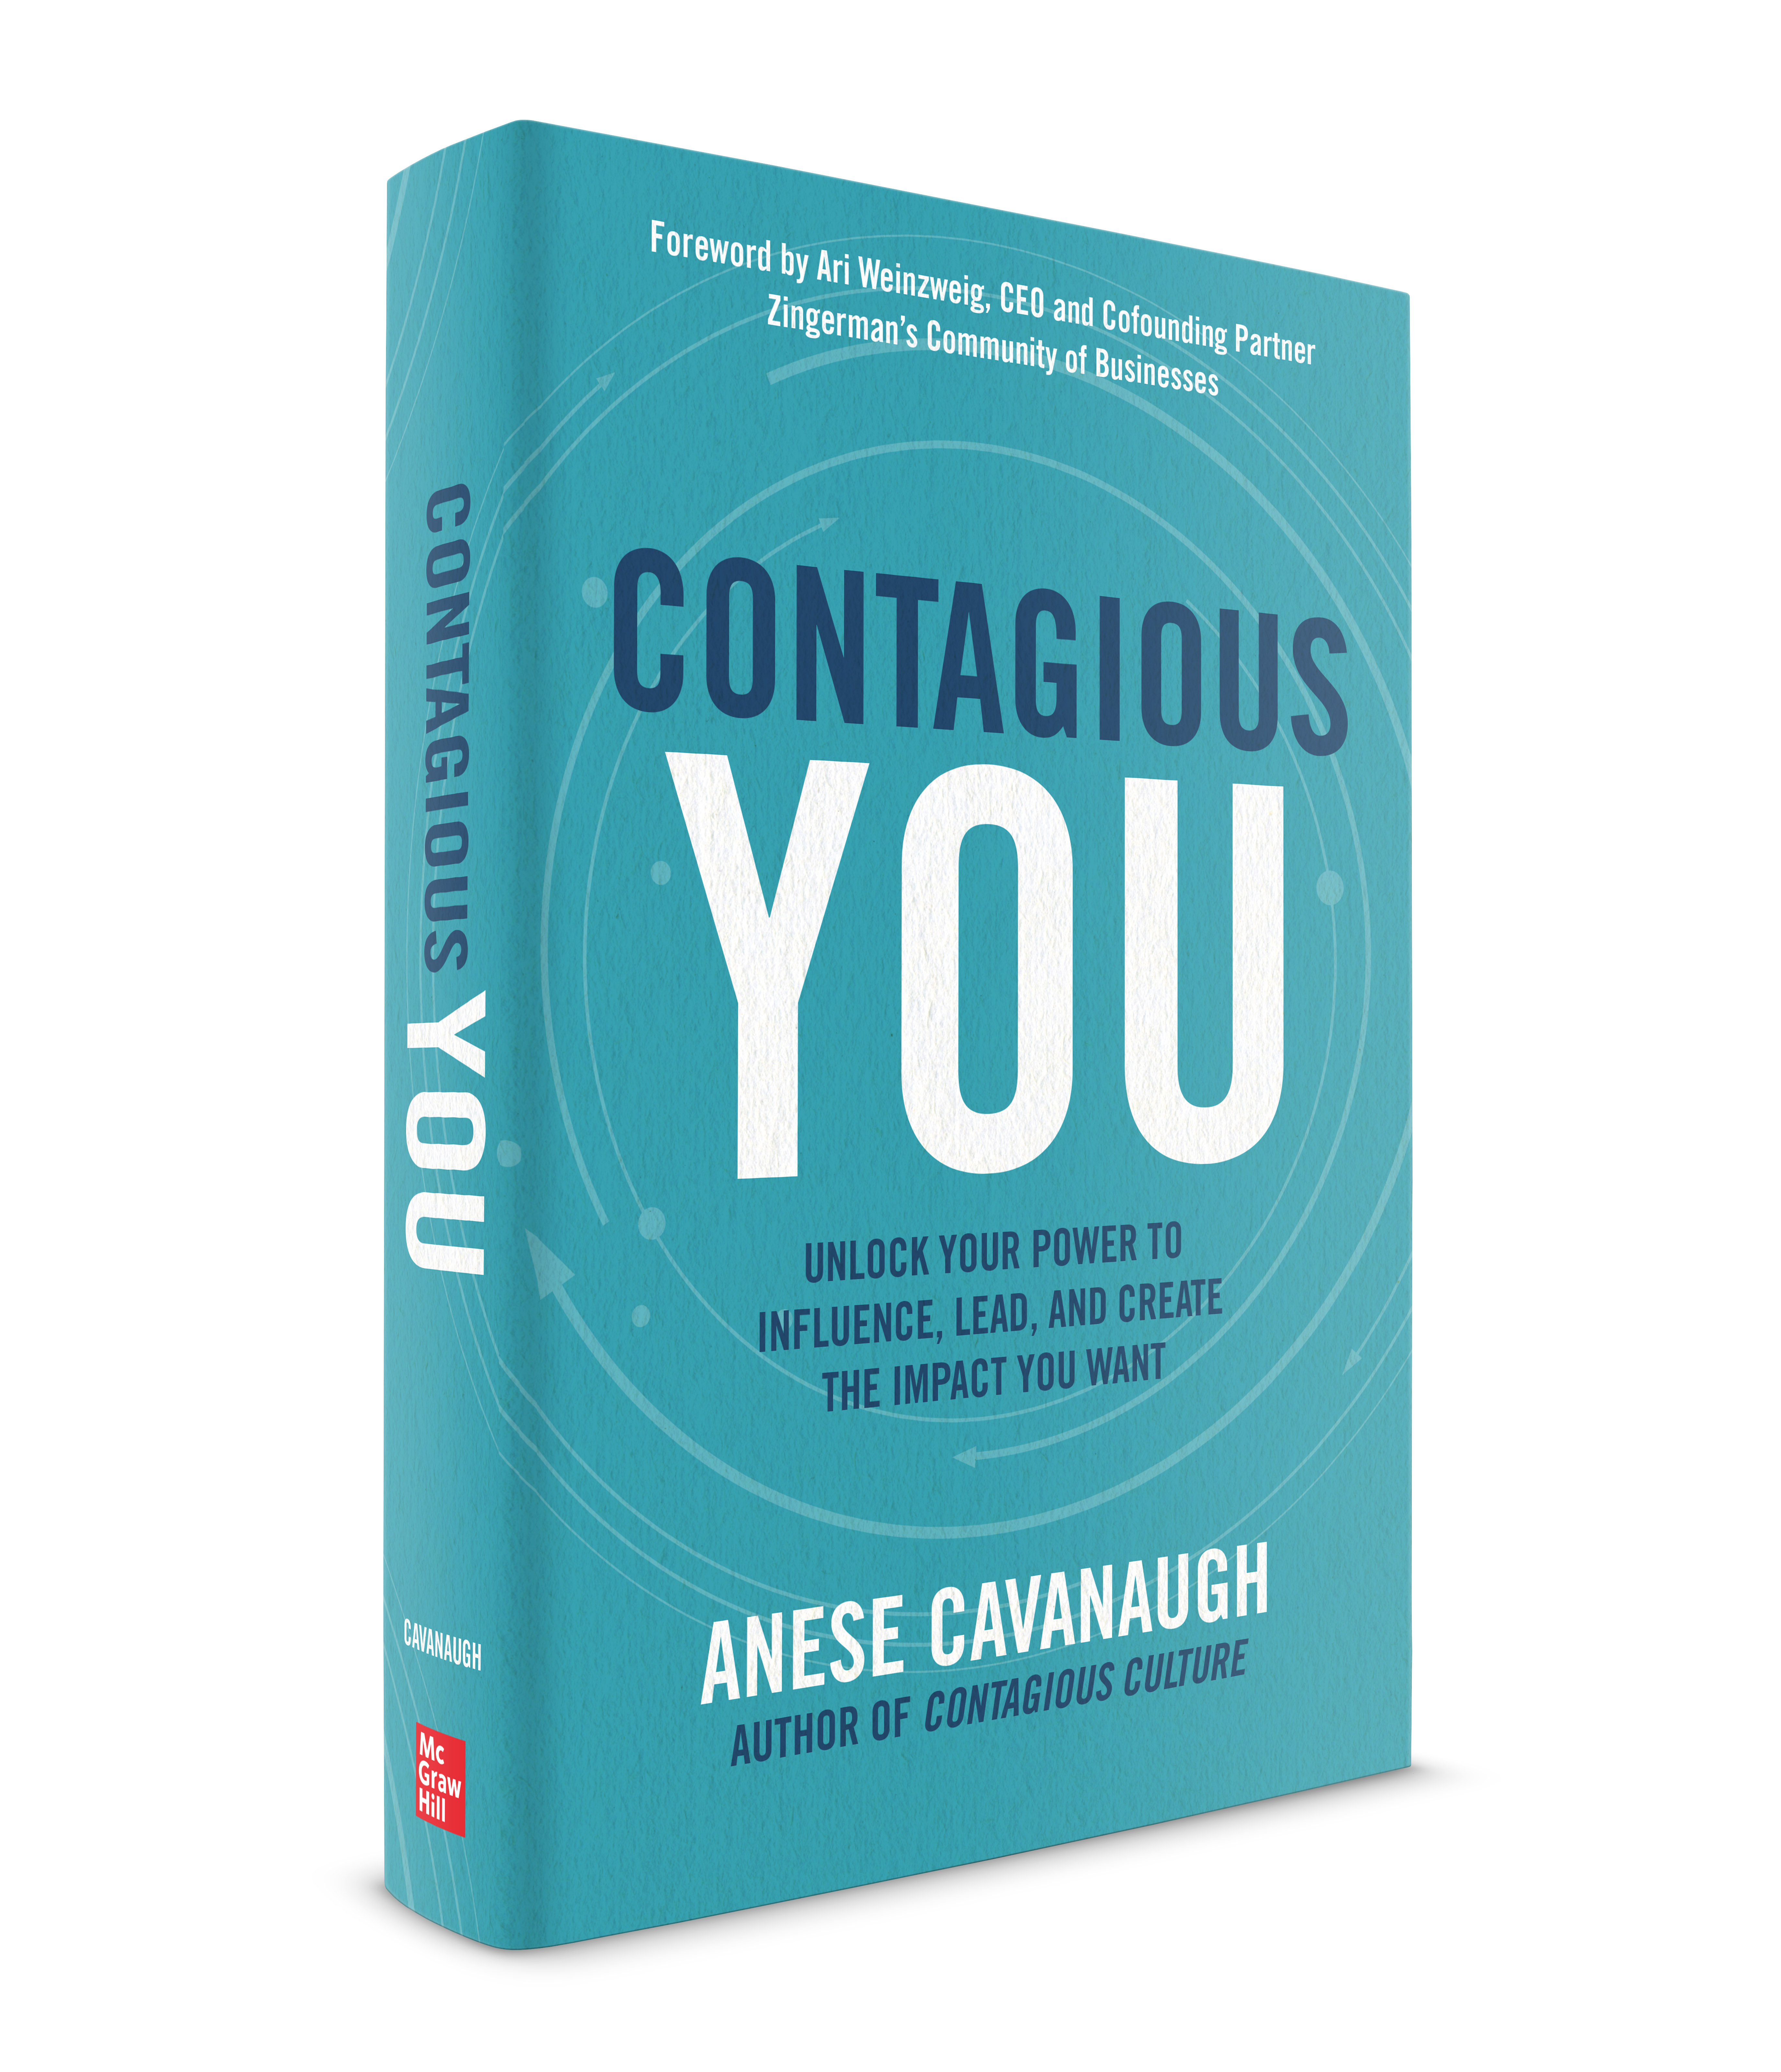 Contagious You book cover